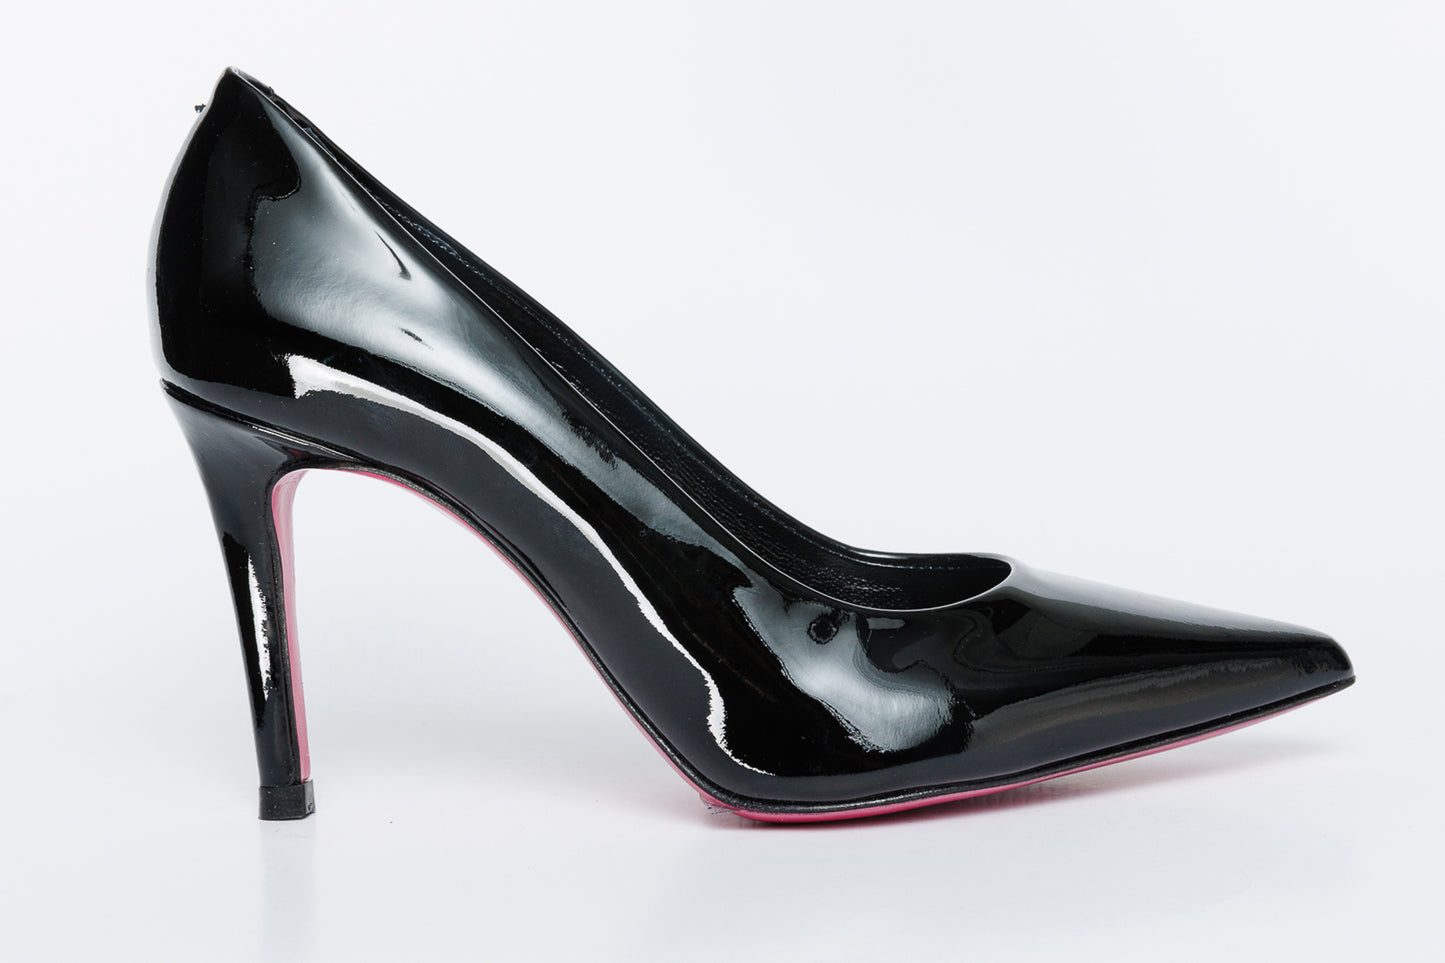 The Ege Black Patent Leather Pump Fuchsia Sole Women Shoe